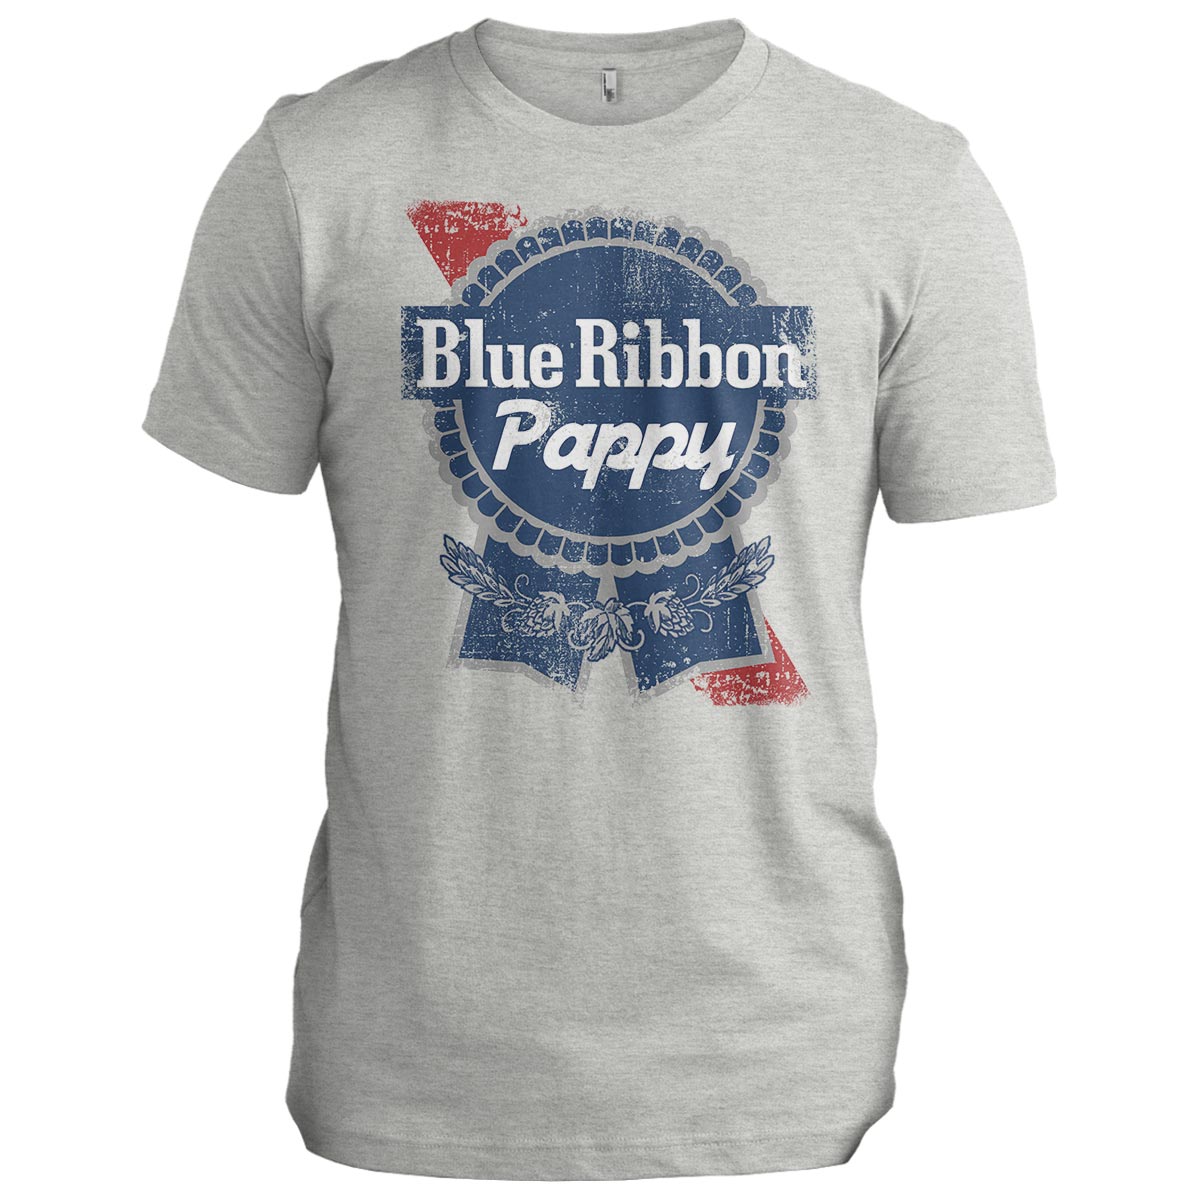 Blue Ribbon pappy